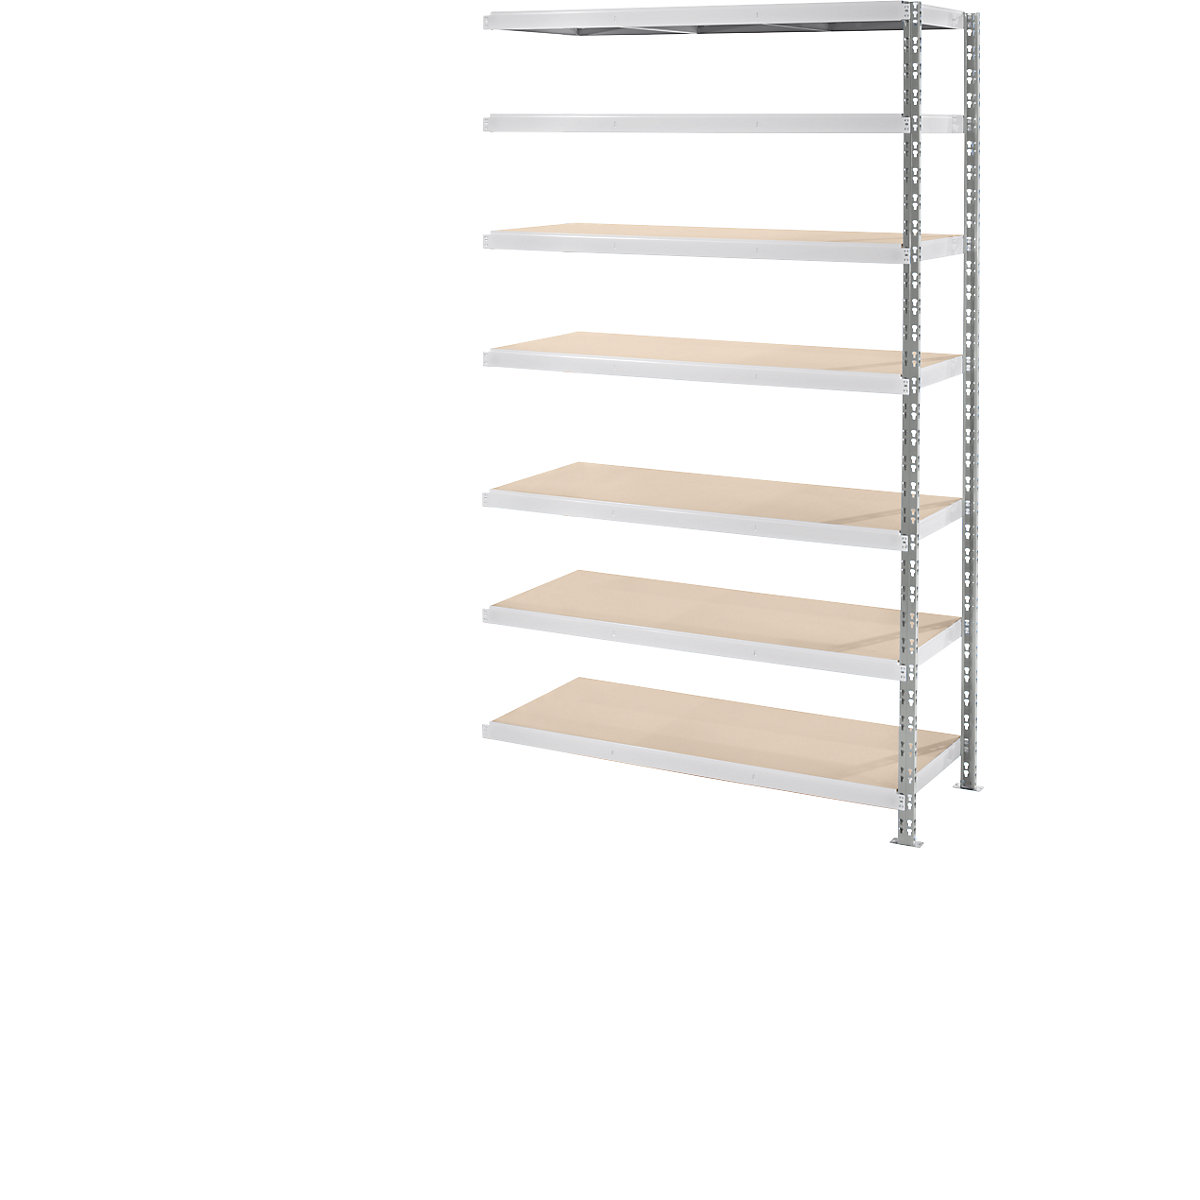 Wide span boltless shelf unit with moulded chipboard shelves, depth 700 mm, extension shelf unit, HxW 2522 x 1525 mm